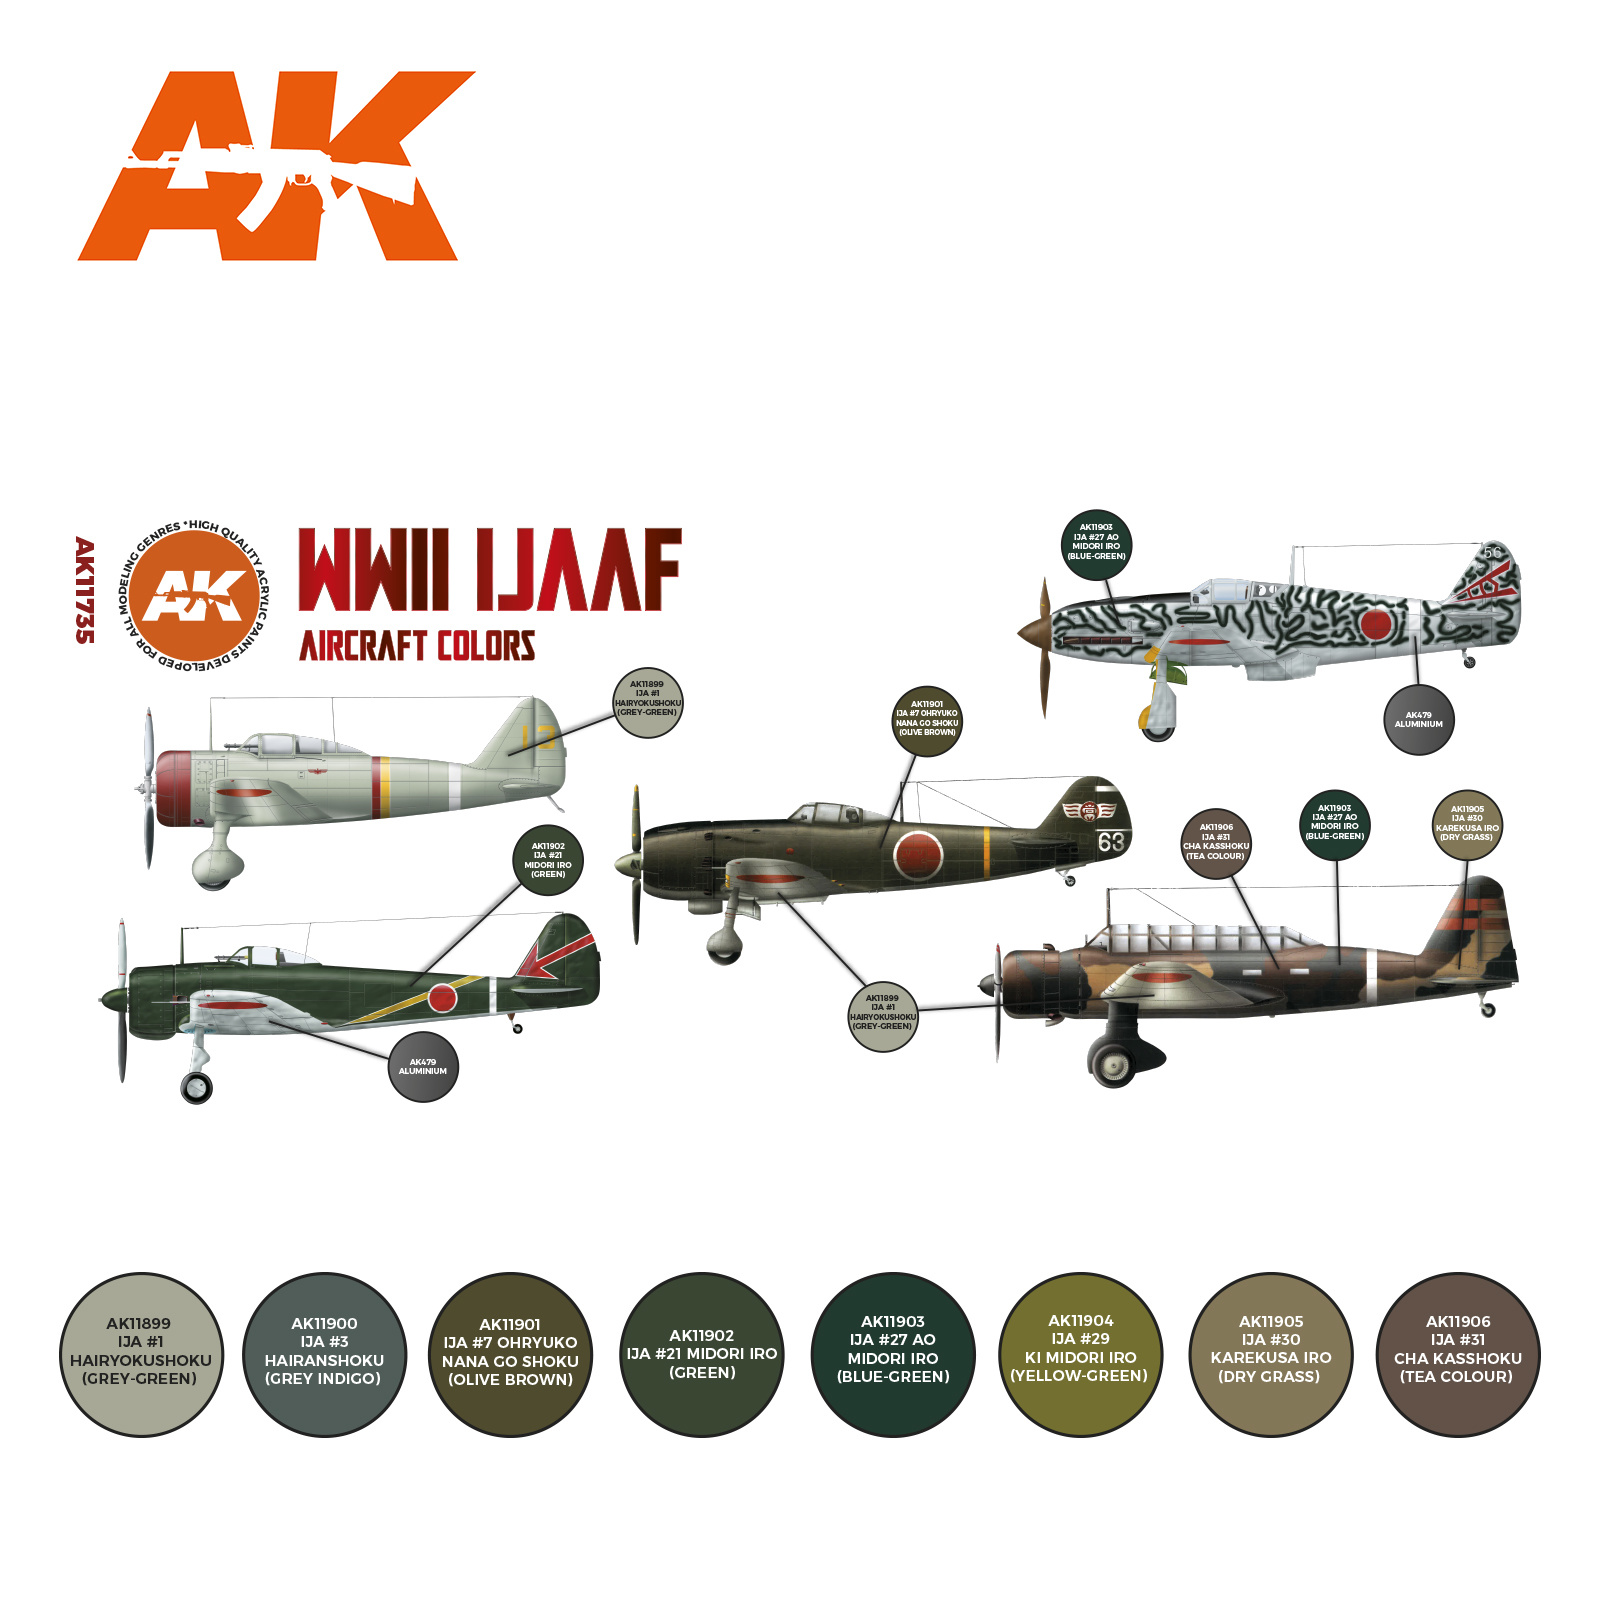 AK-Interactive WWII IJAAF Aircraft Colors Set - AK-Interactive - AK-11735